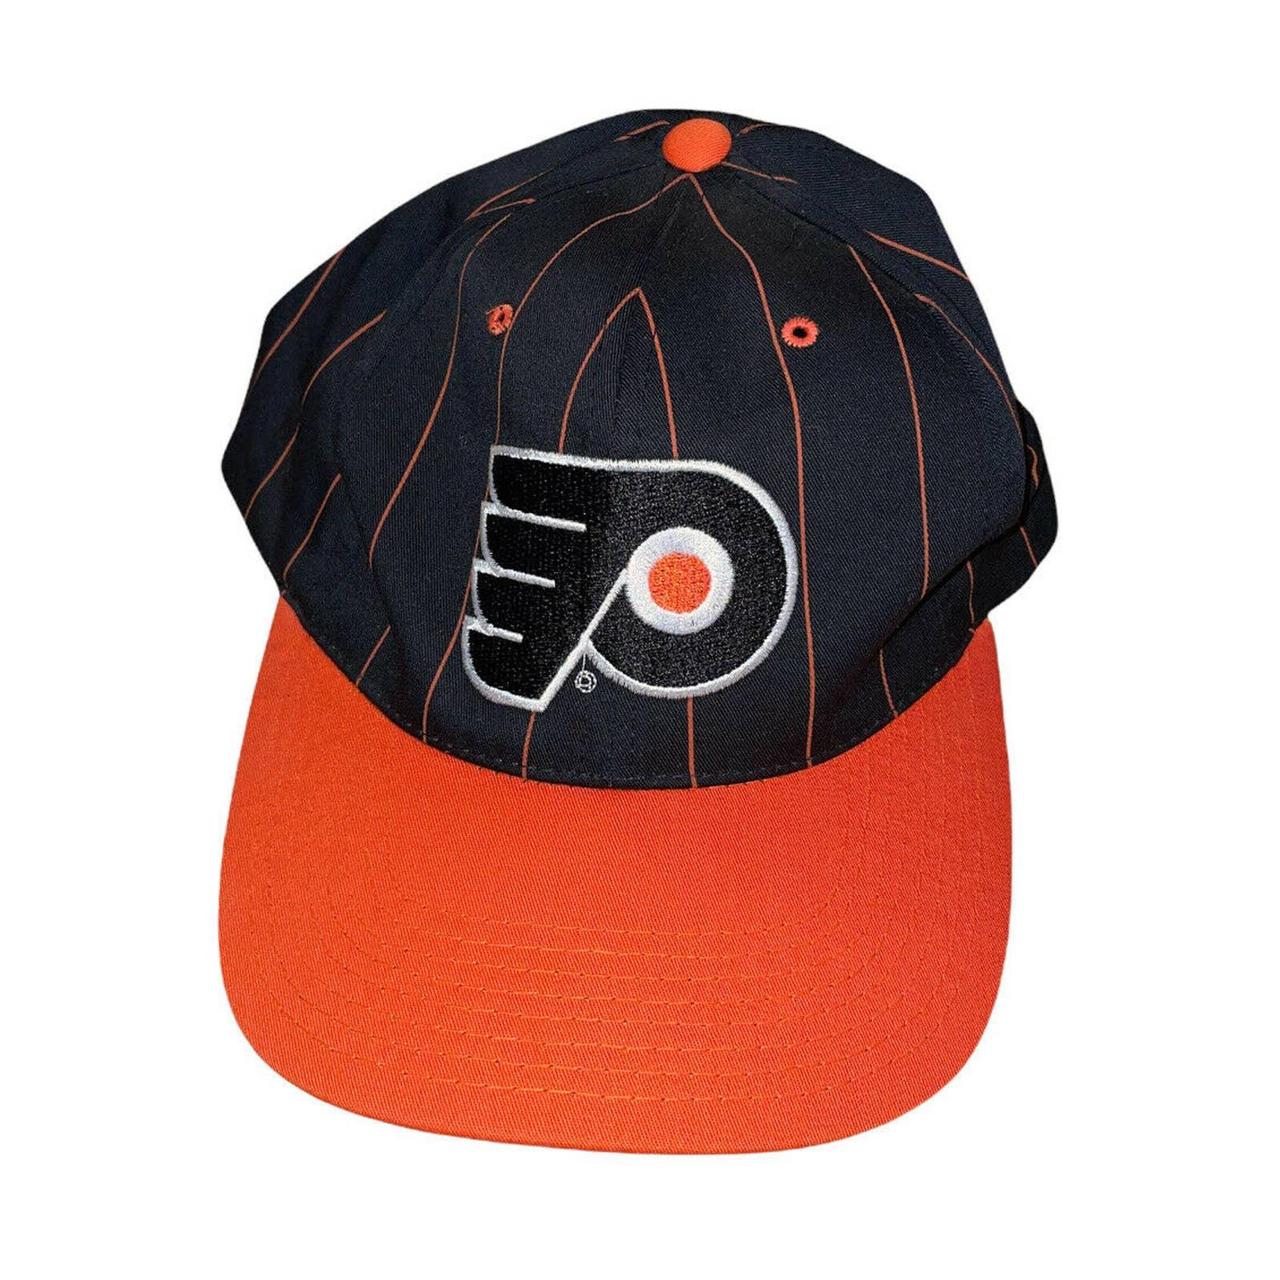 Vintage Philadelphia Flyers Strapback Hat Baseball Cap